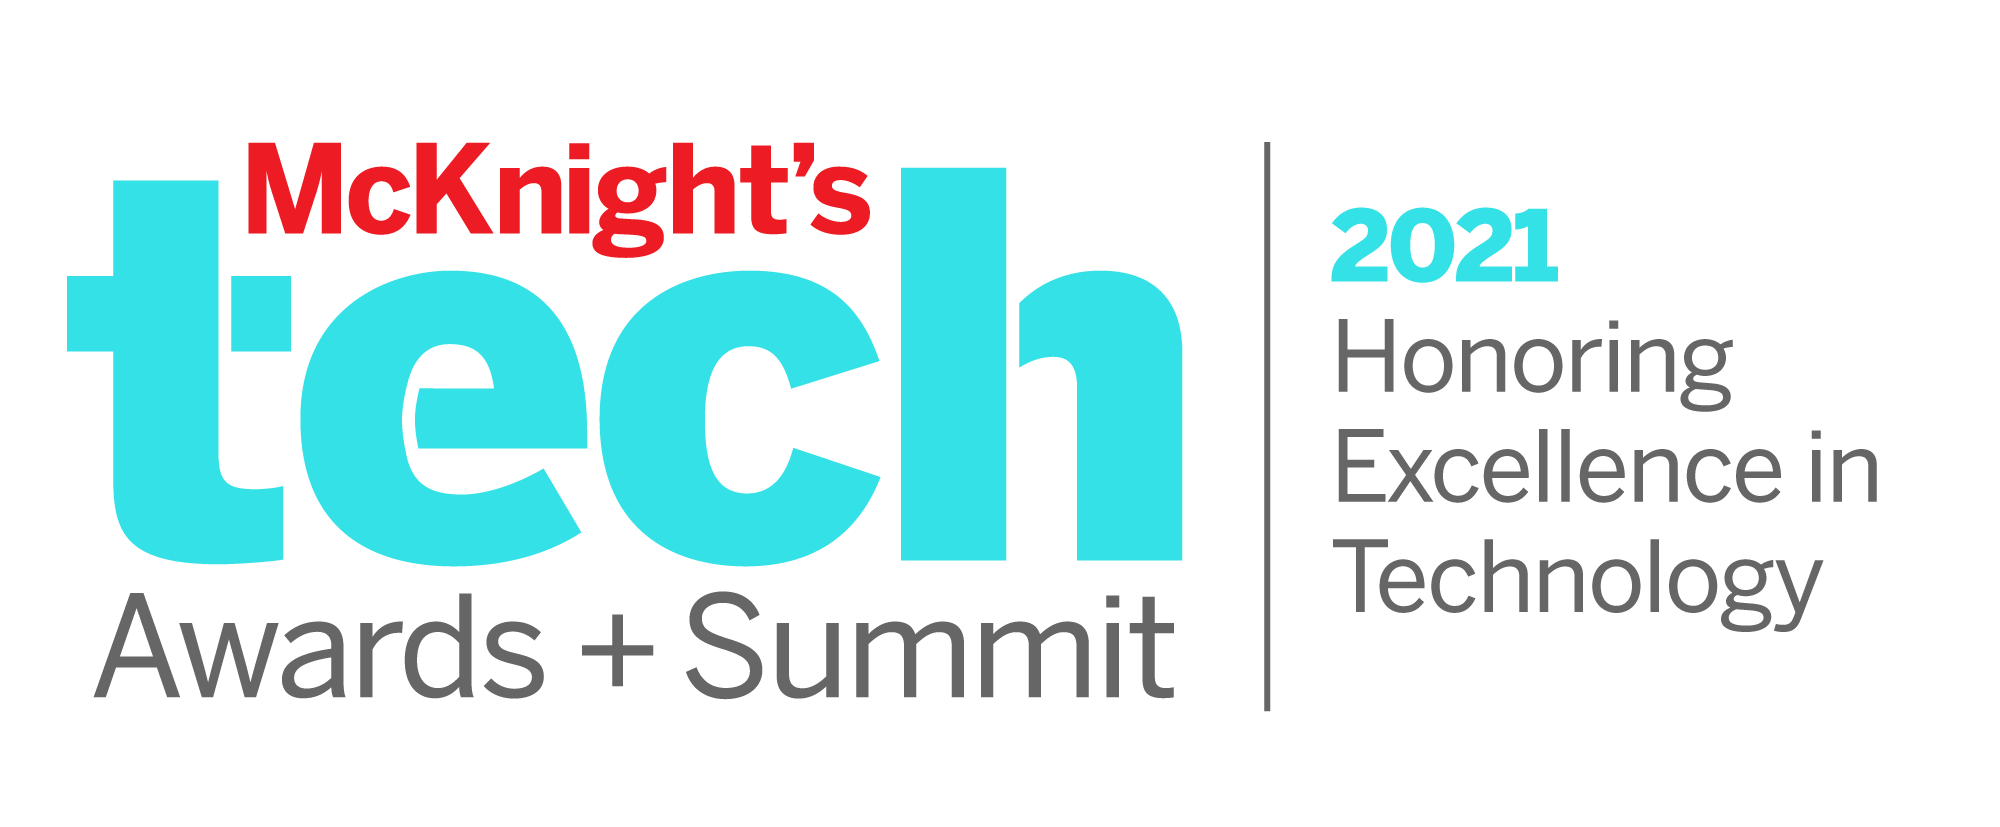 2021 McKnight’s Tech Awards accepting entries, new summit announced – McKnight’s Technology Awards